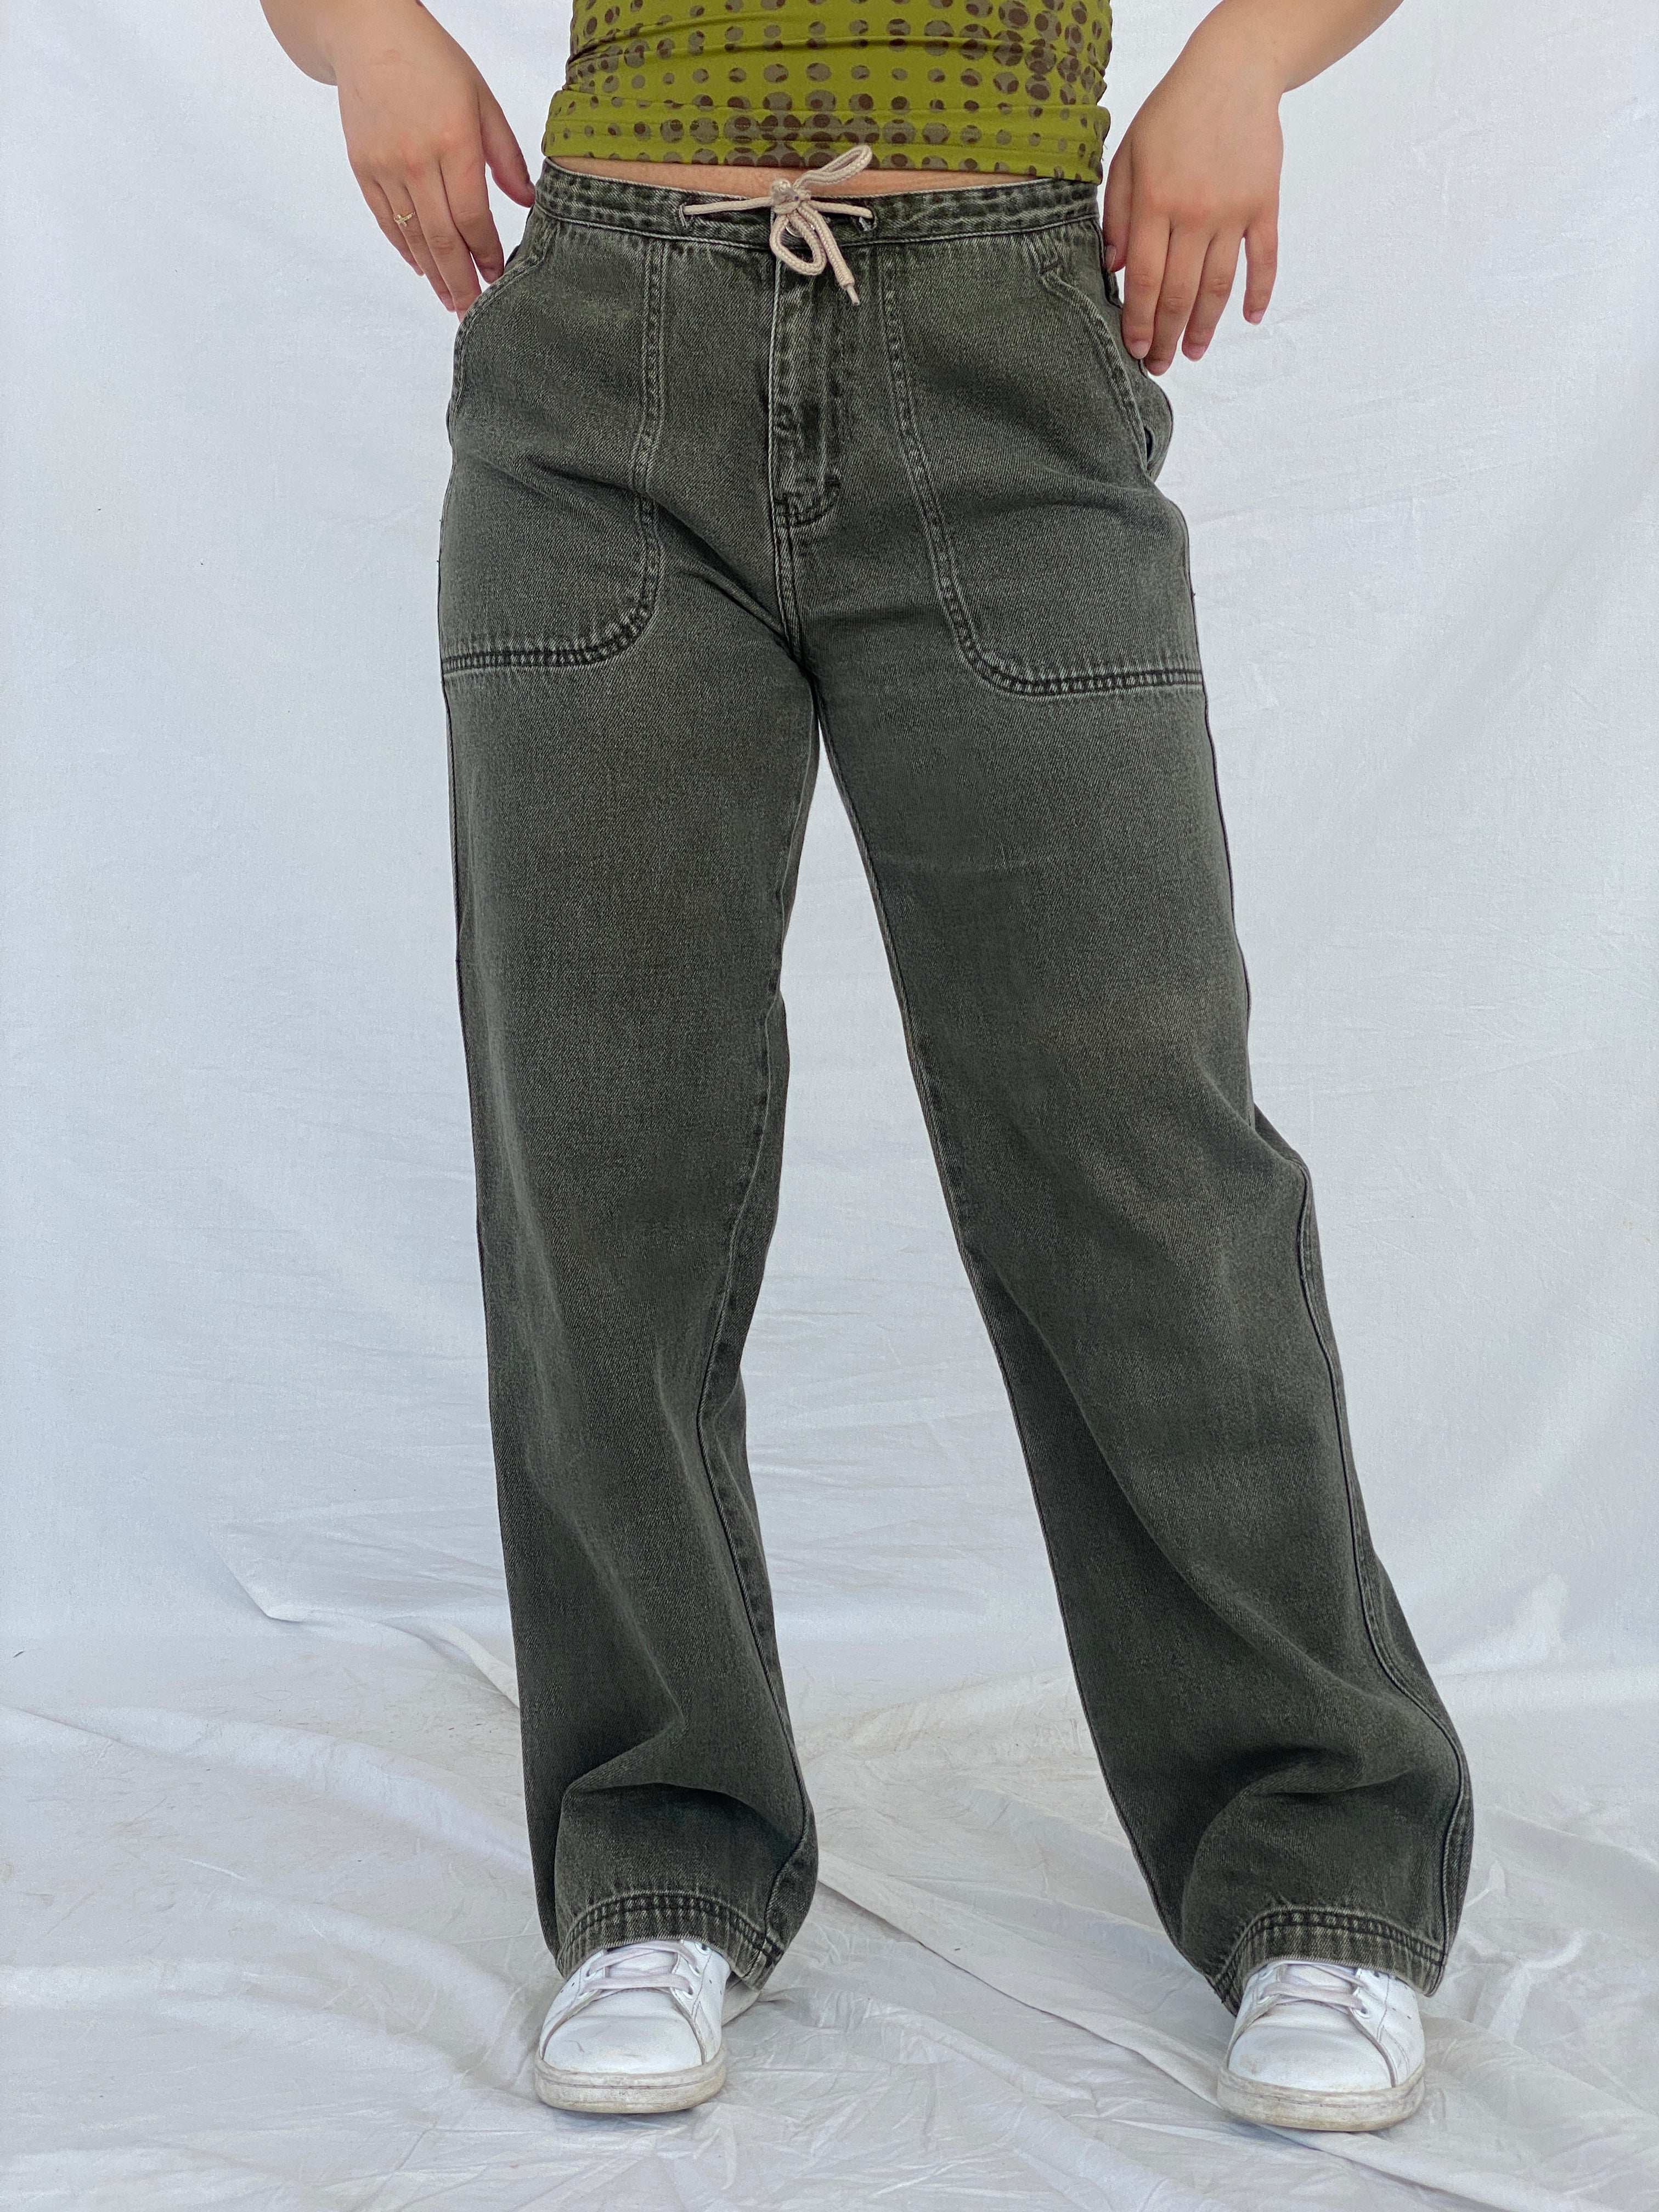 Vintage Y2K Tommy Hilfiger Jeans - Size 8 - Balagan Vintage Jeans 00s, jeans, Lana, NEW IN, Tommy hilfiger